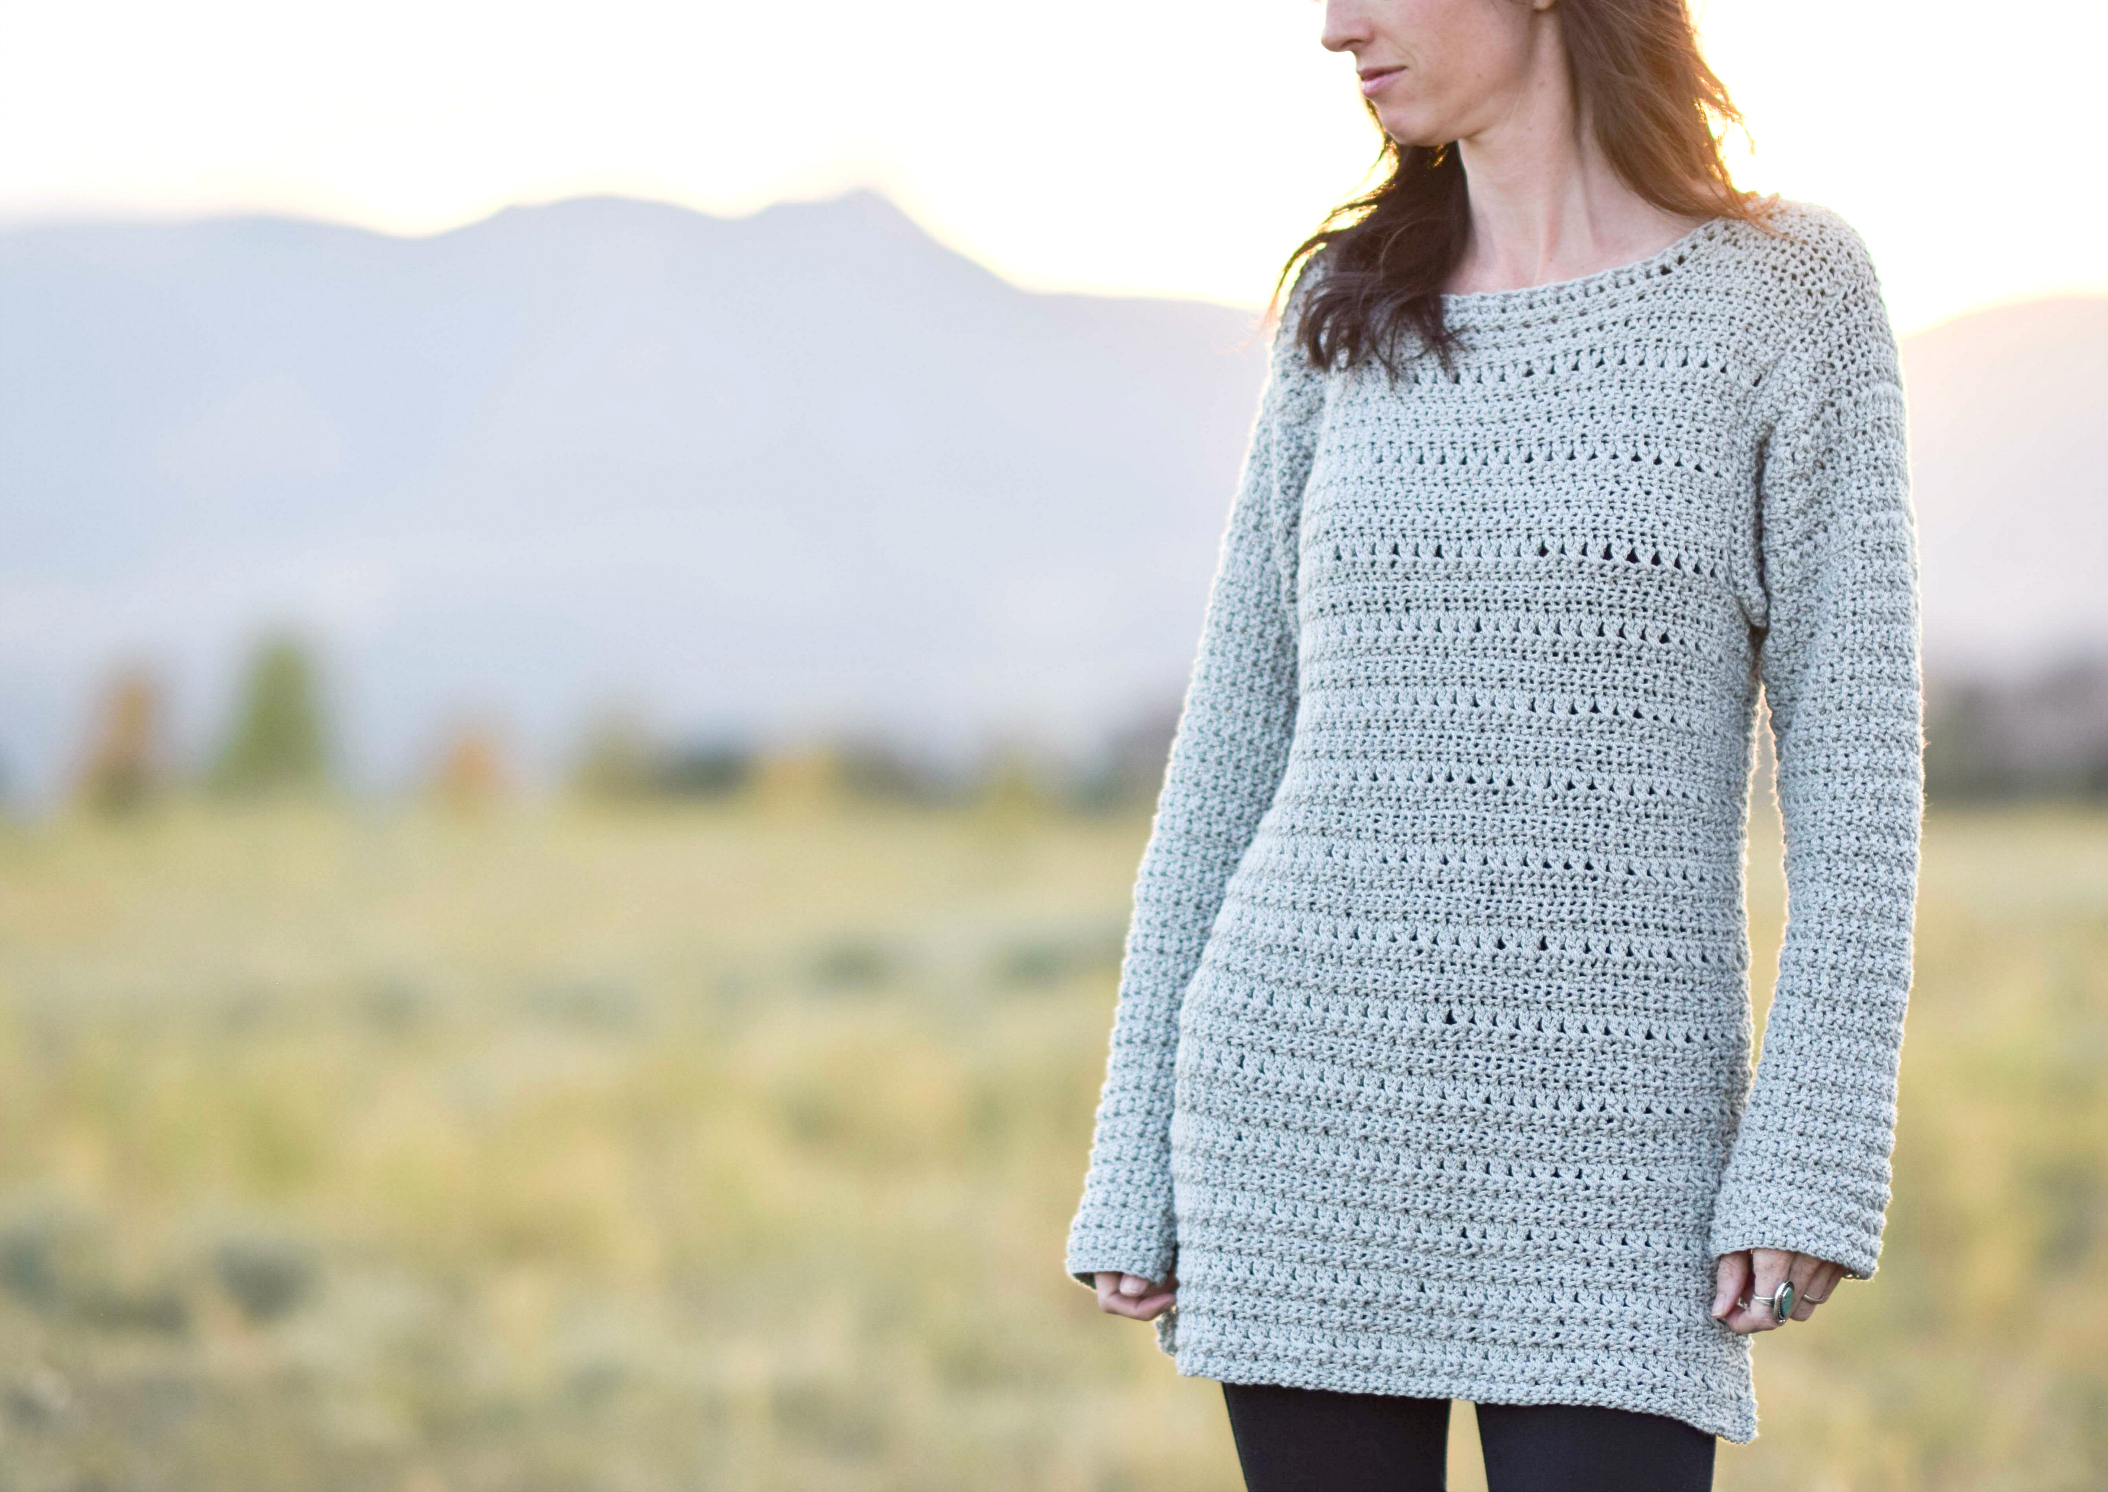 https://www.mamainastitch.com/wp-content/uploads/2018/10/Grey-Crocheted-Sweater-Pattern-5.jpg